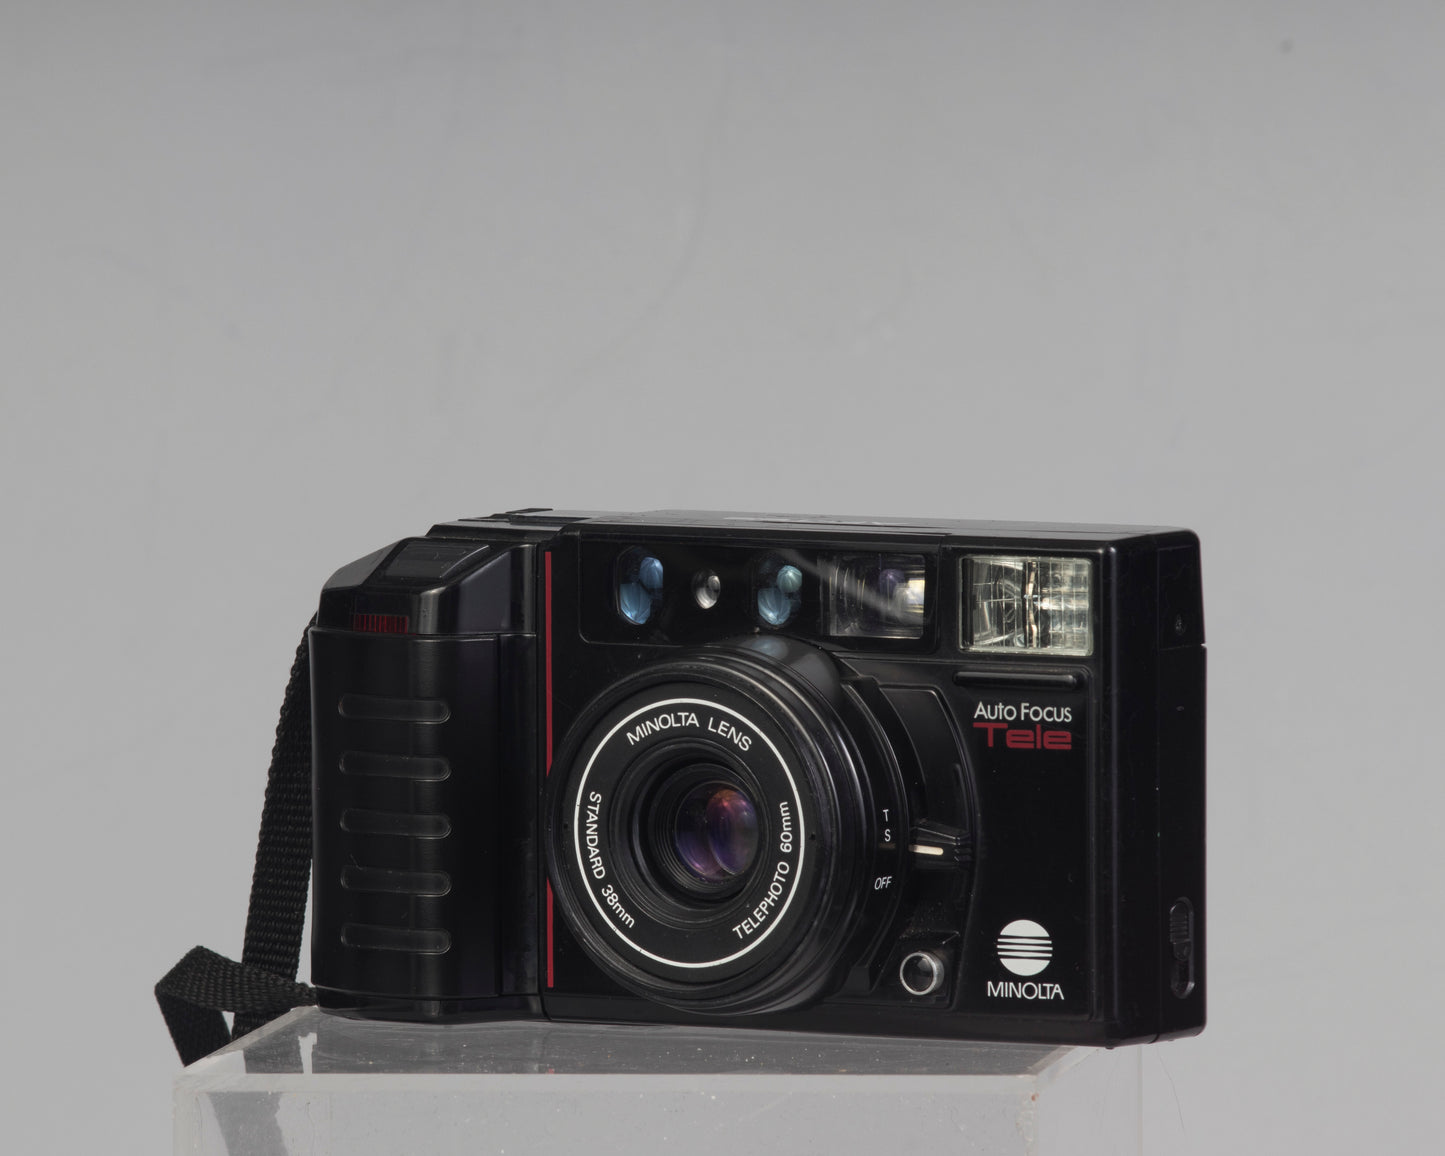 Minolta AF Tele dual lens 35mm point-and-shoot film camera (serial 54126568)